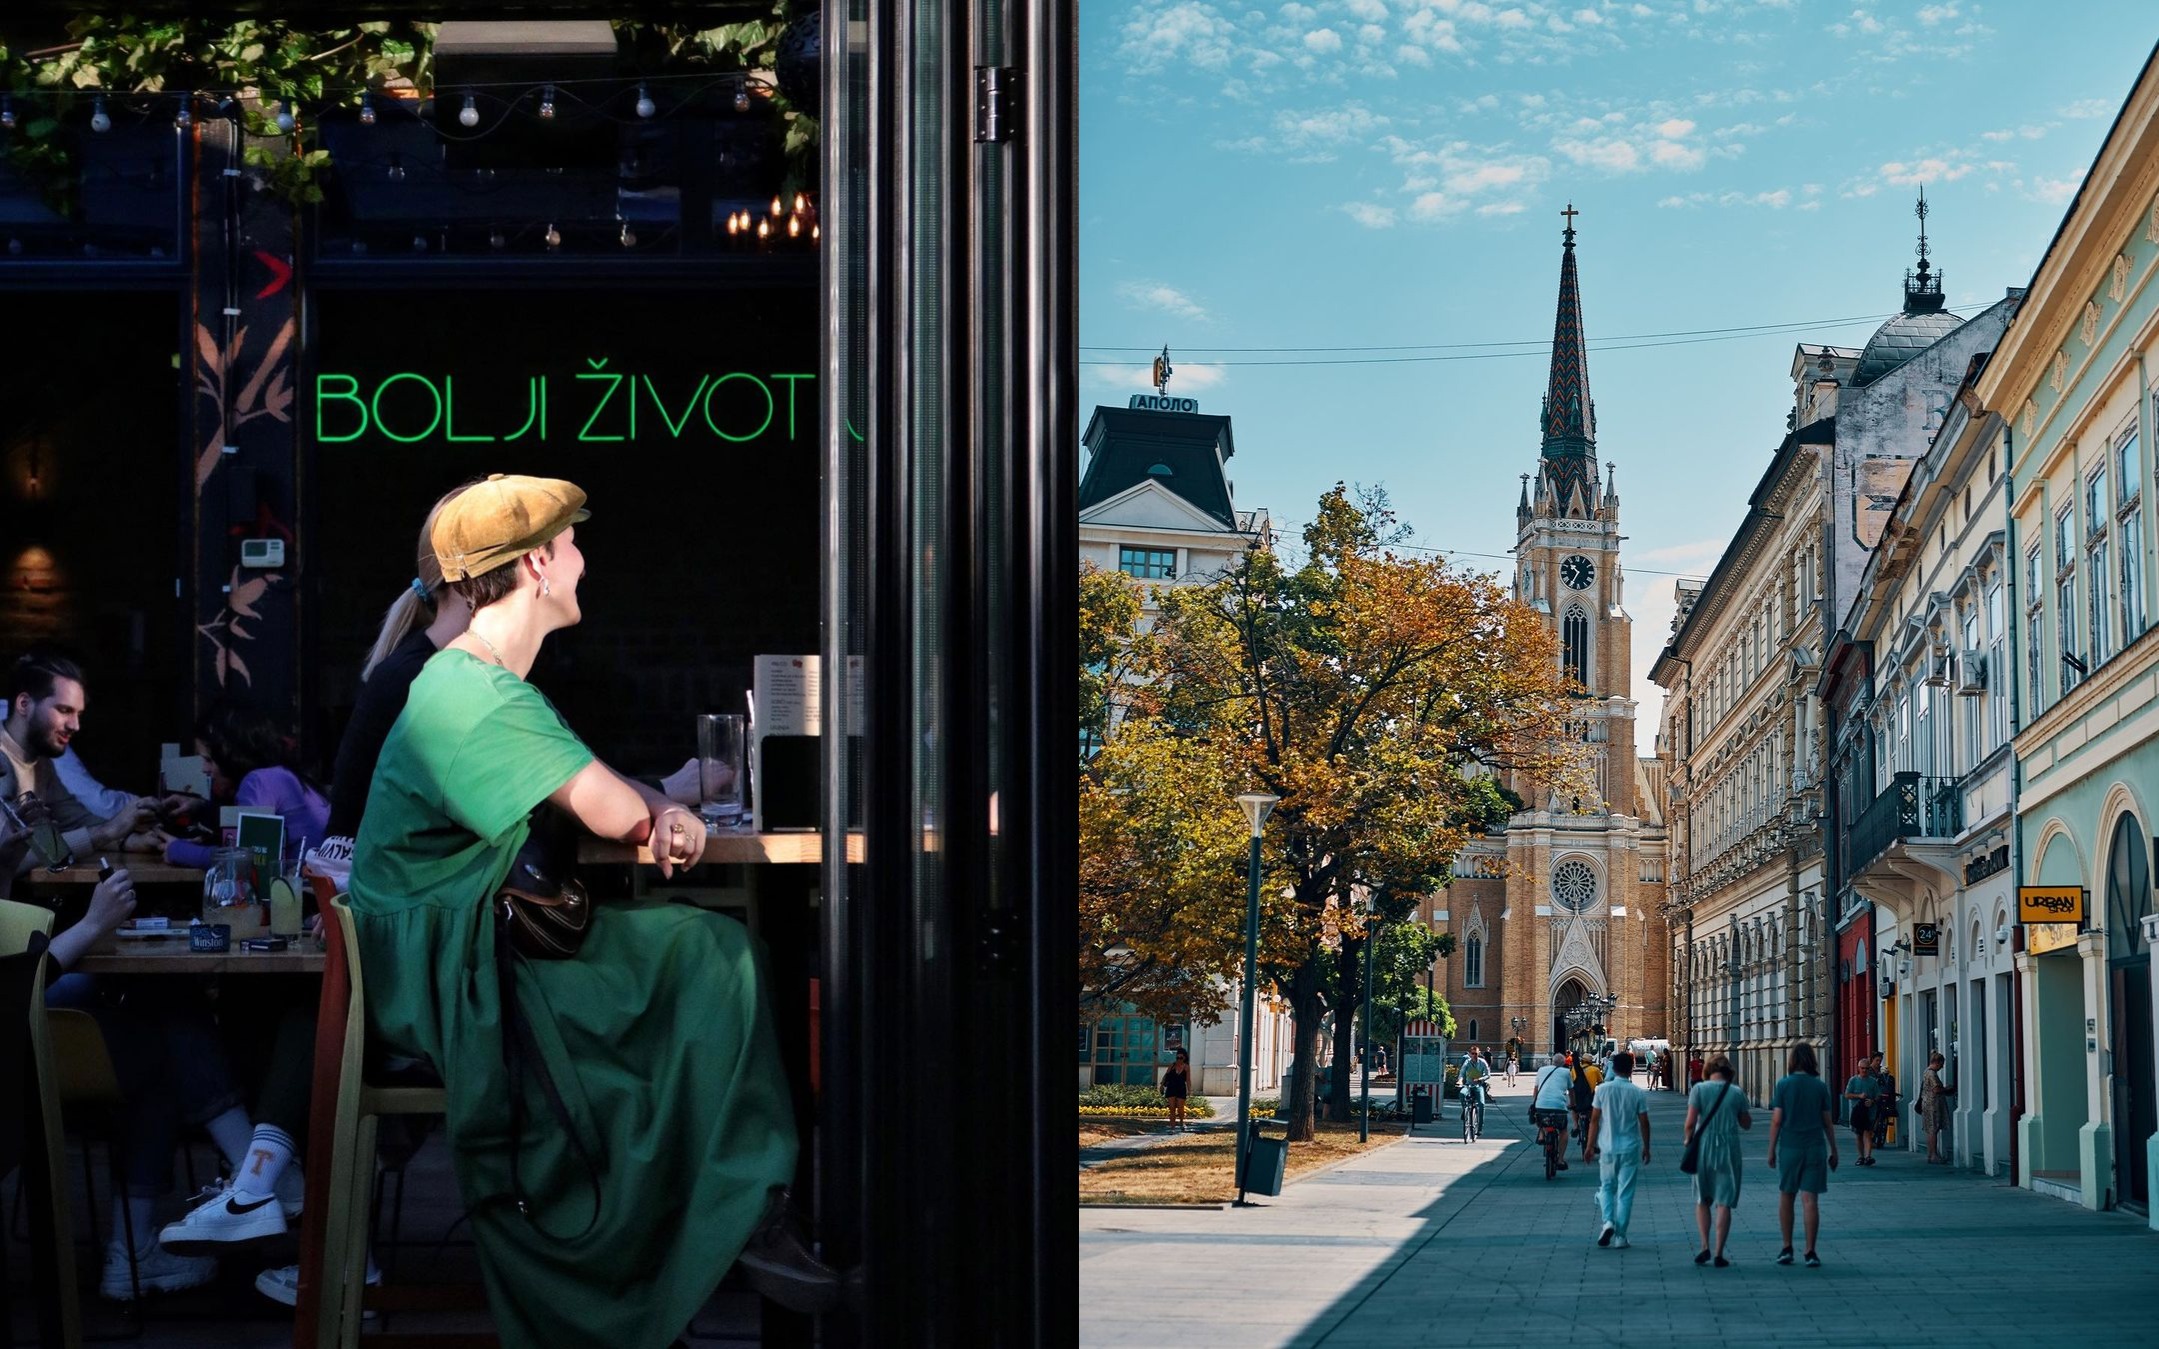 Uskoro počinje Novi Sad film festival: Donosimo vodič kroz grad